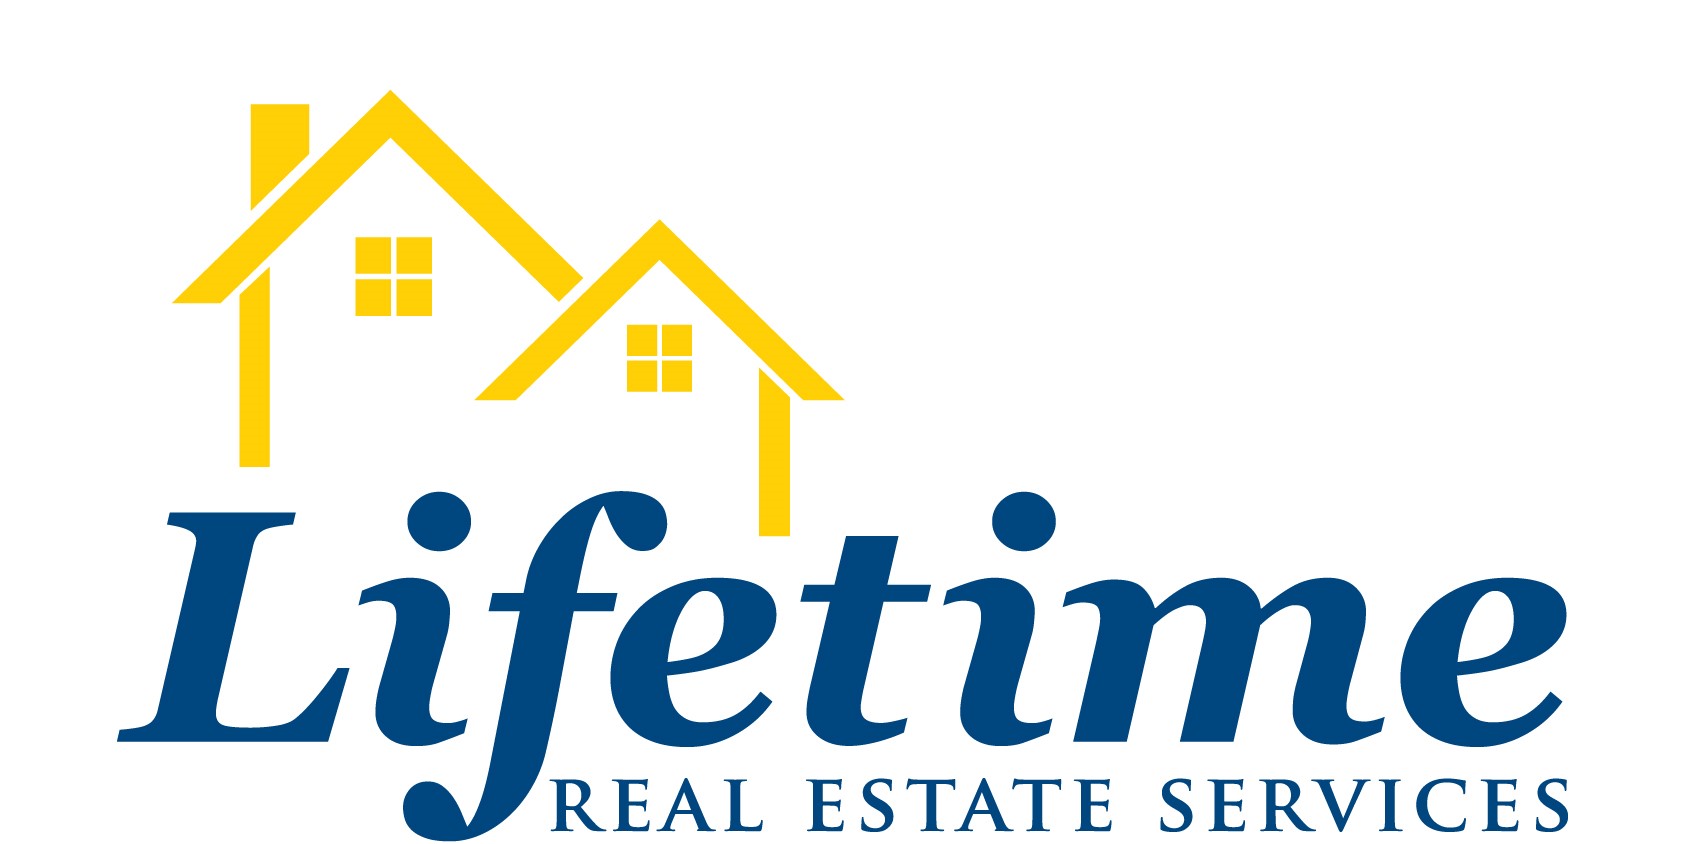 A logo of a real estate service company.